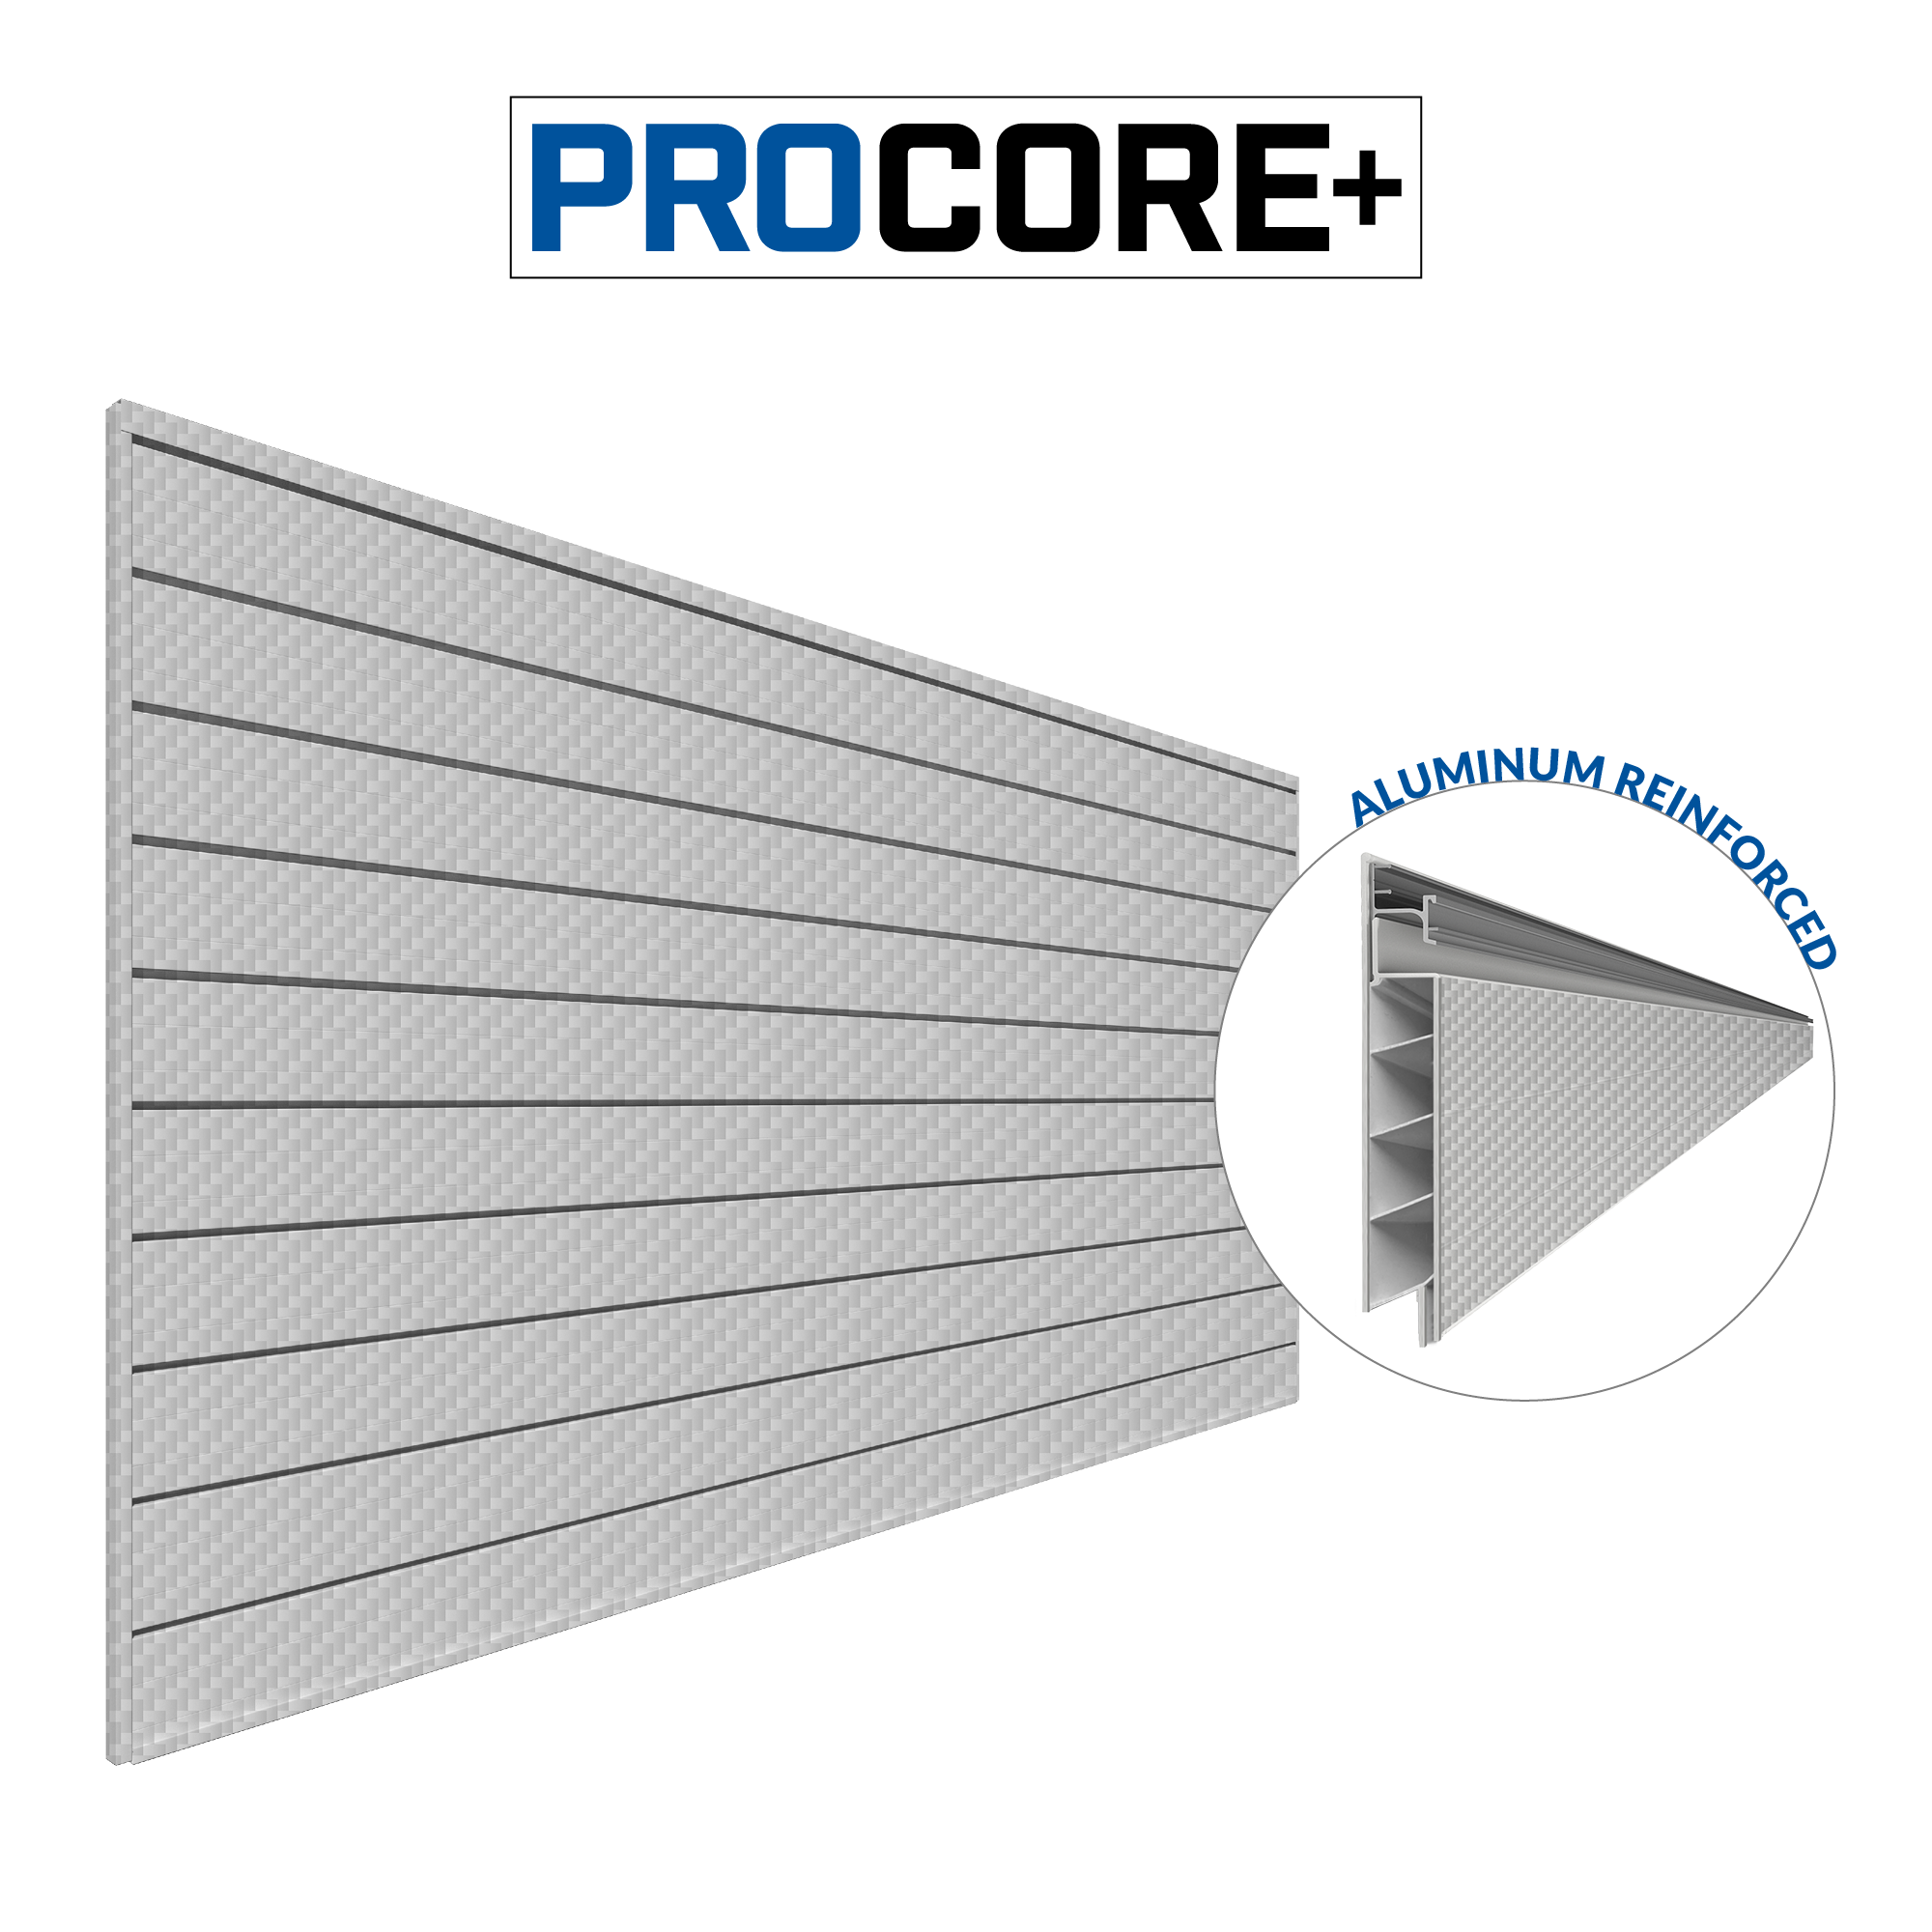 4 x 8 ft. PROCORE+ Silver gray Carbon fiber PVC Slatwall